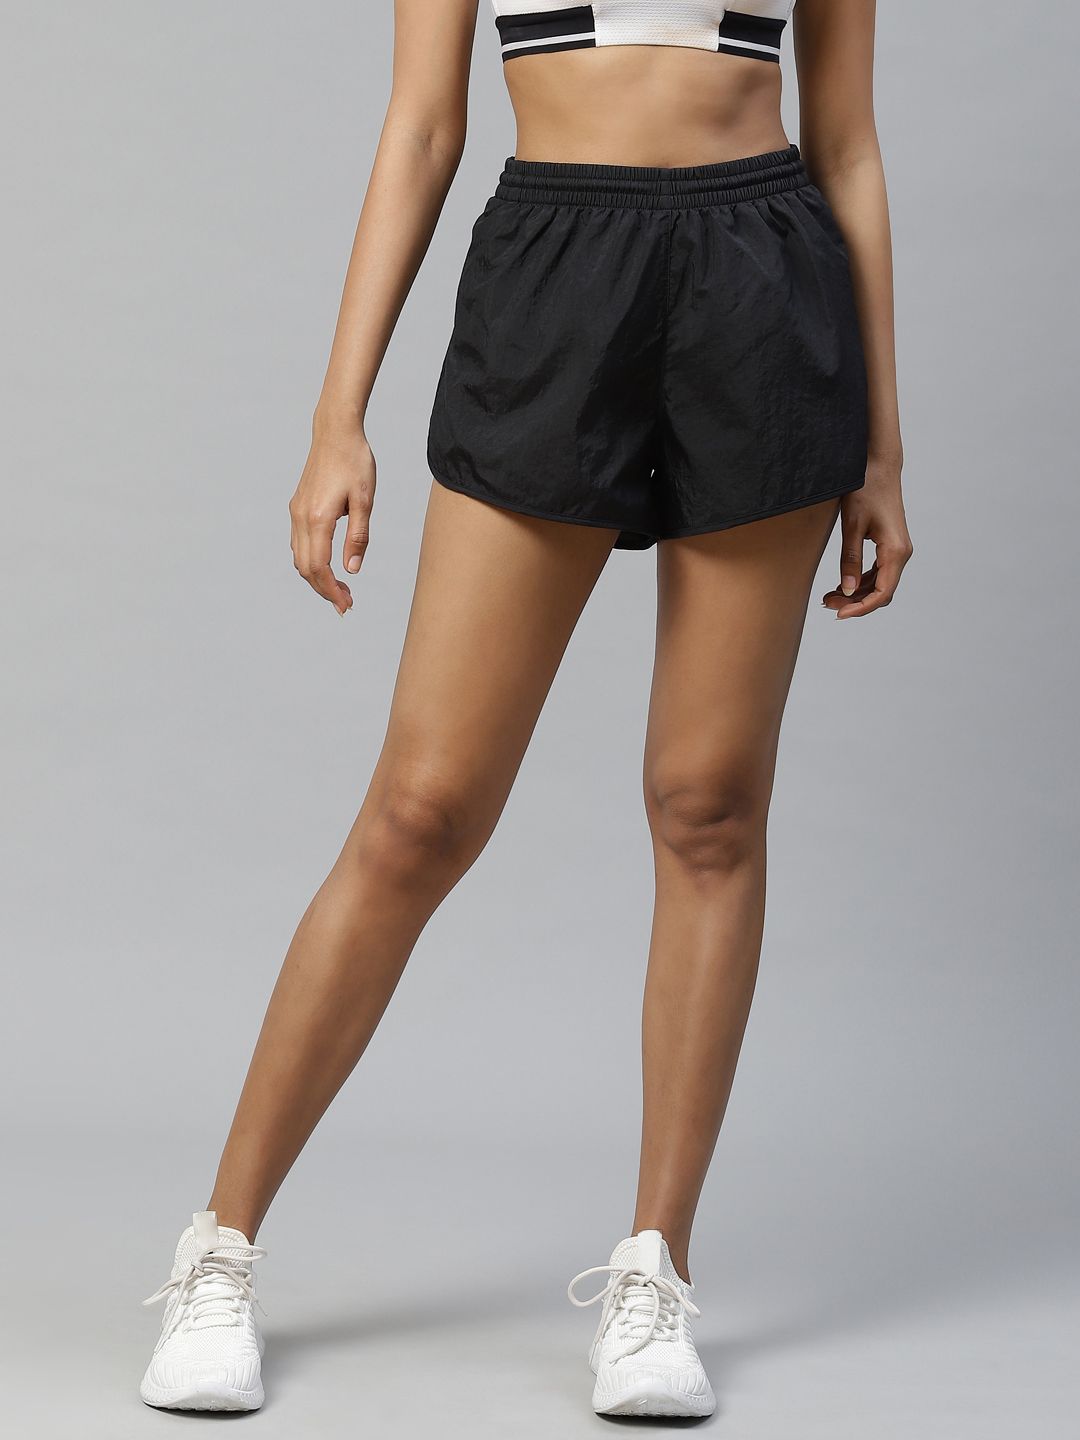 ADIDAS Originals Women Black 3 Stripes Sports Shorts Price in India